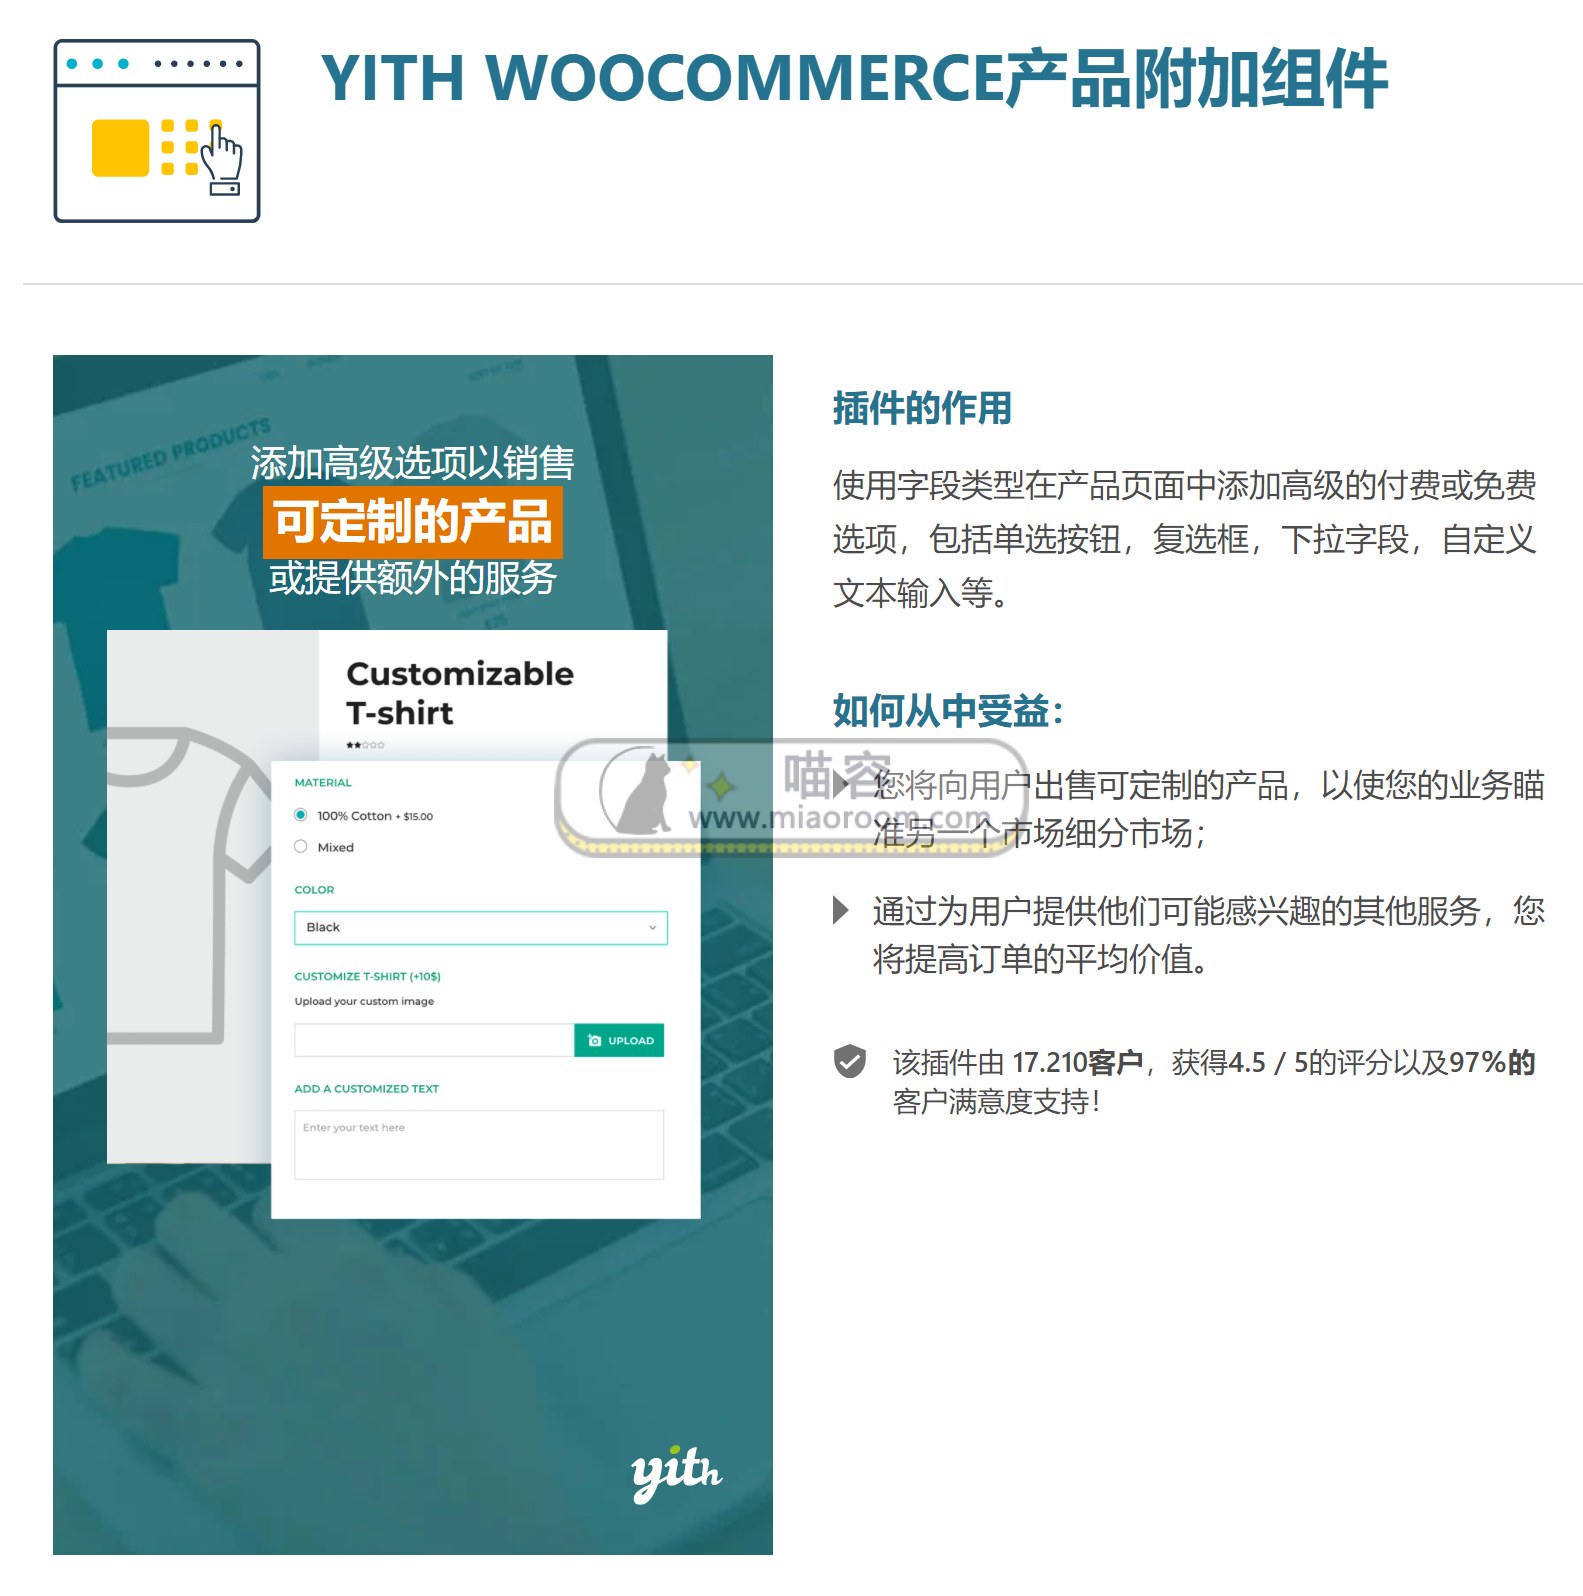 YITH WooCommerce Product Add-ons 产品功能增强扩展 破解专业版 - 第1张